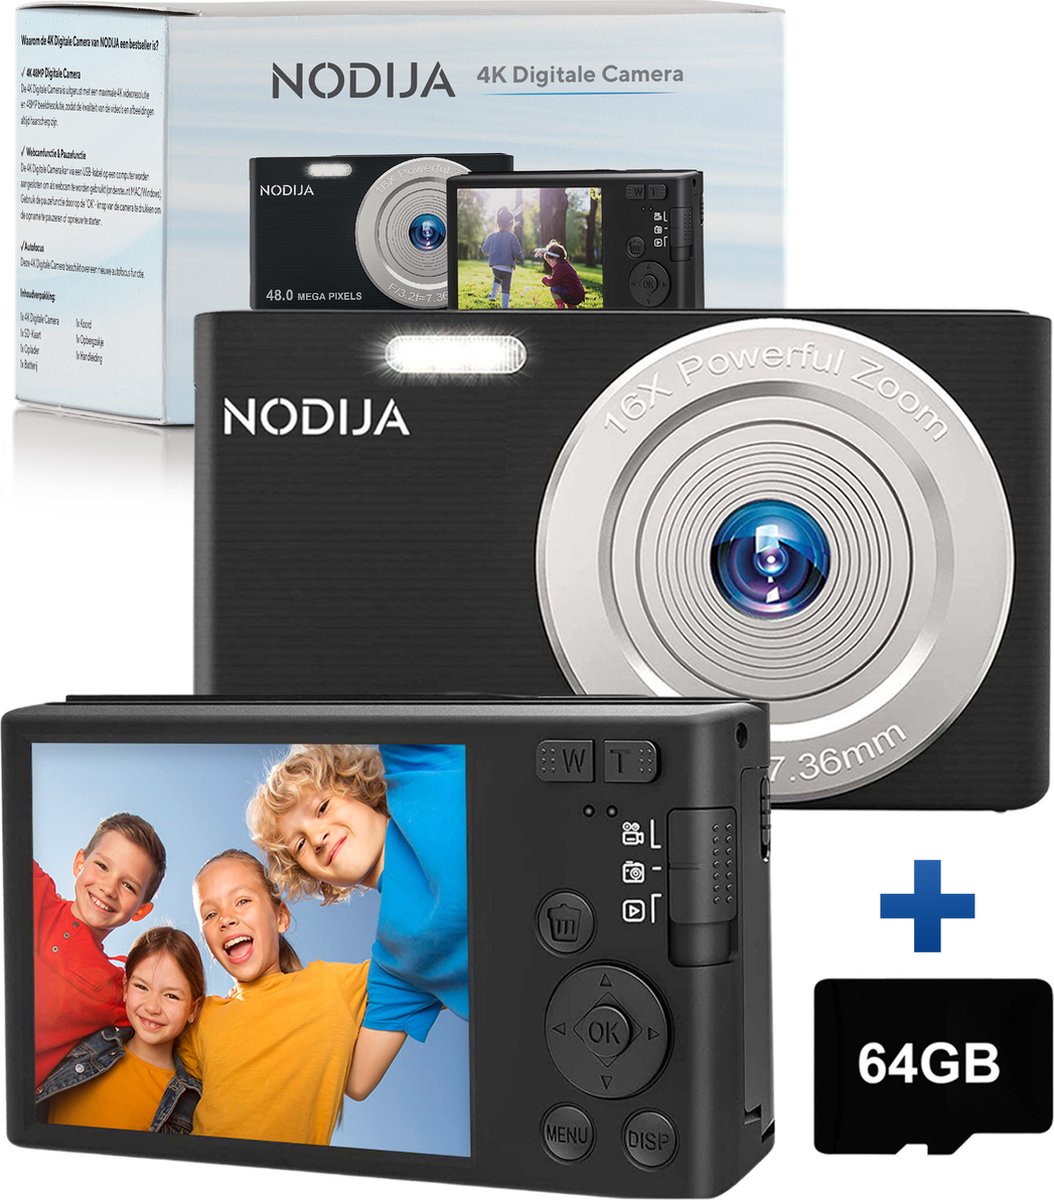 ader Franje huis NODIJA® Digitale Camera - Compact Camera - Fototoestel - Videocamera - 64GB  SD-kaart | bol.com